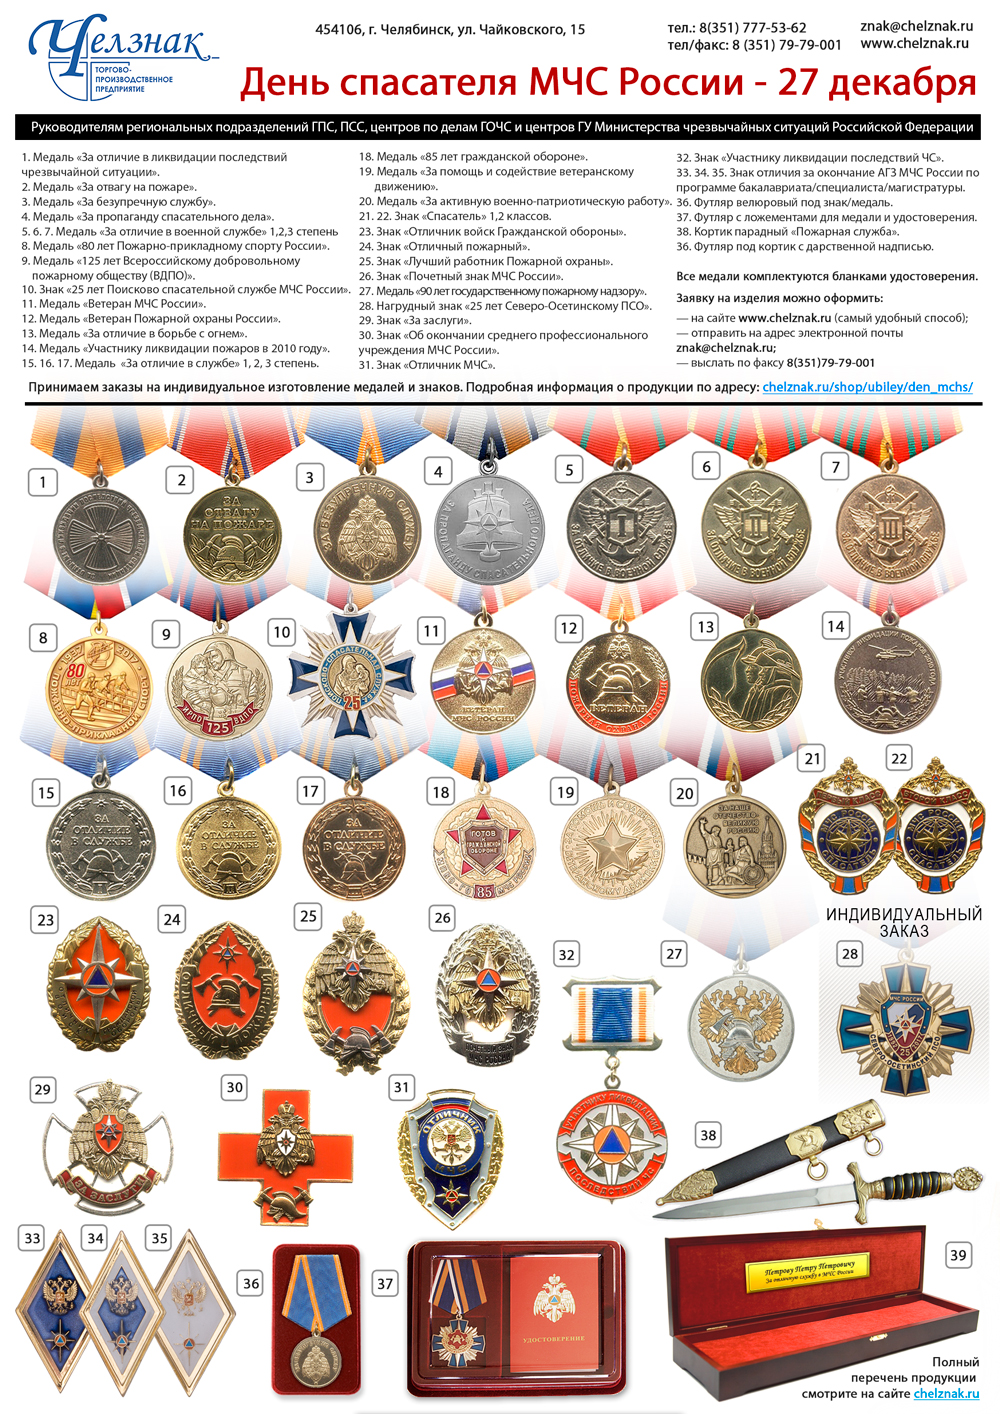 Медали мчс россии по значимости фото и описание